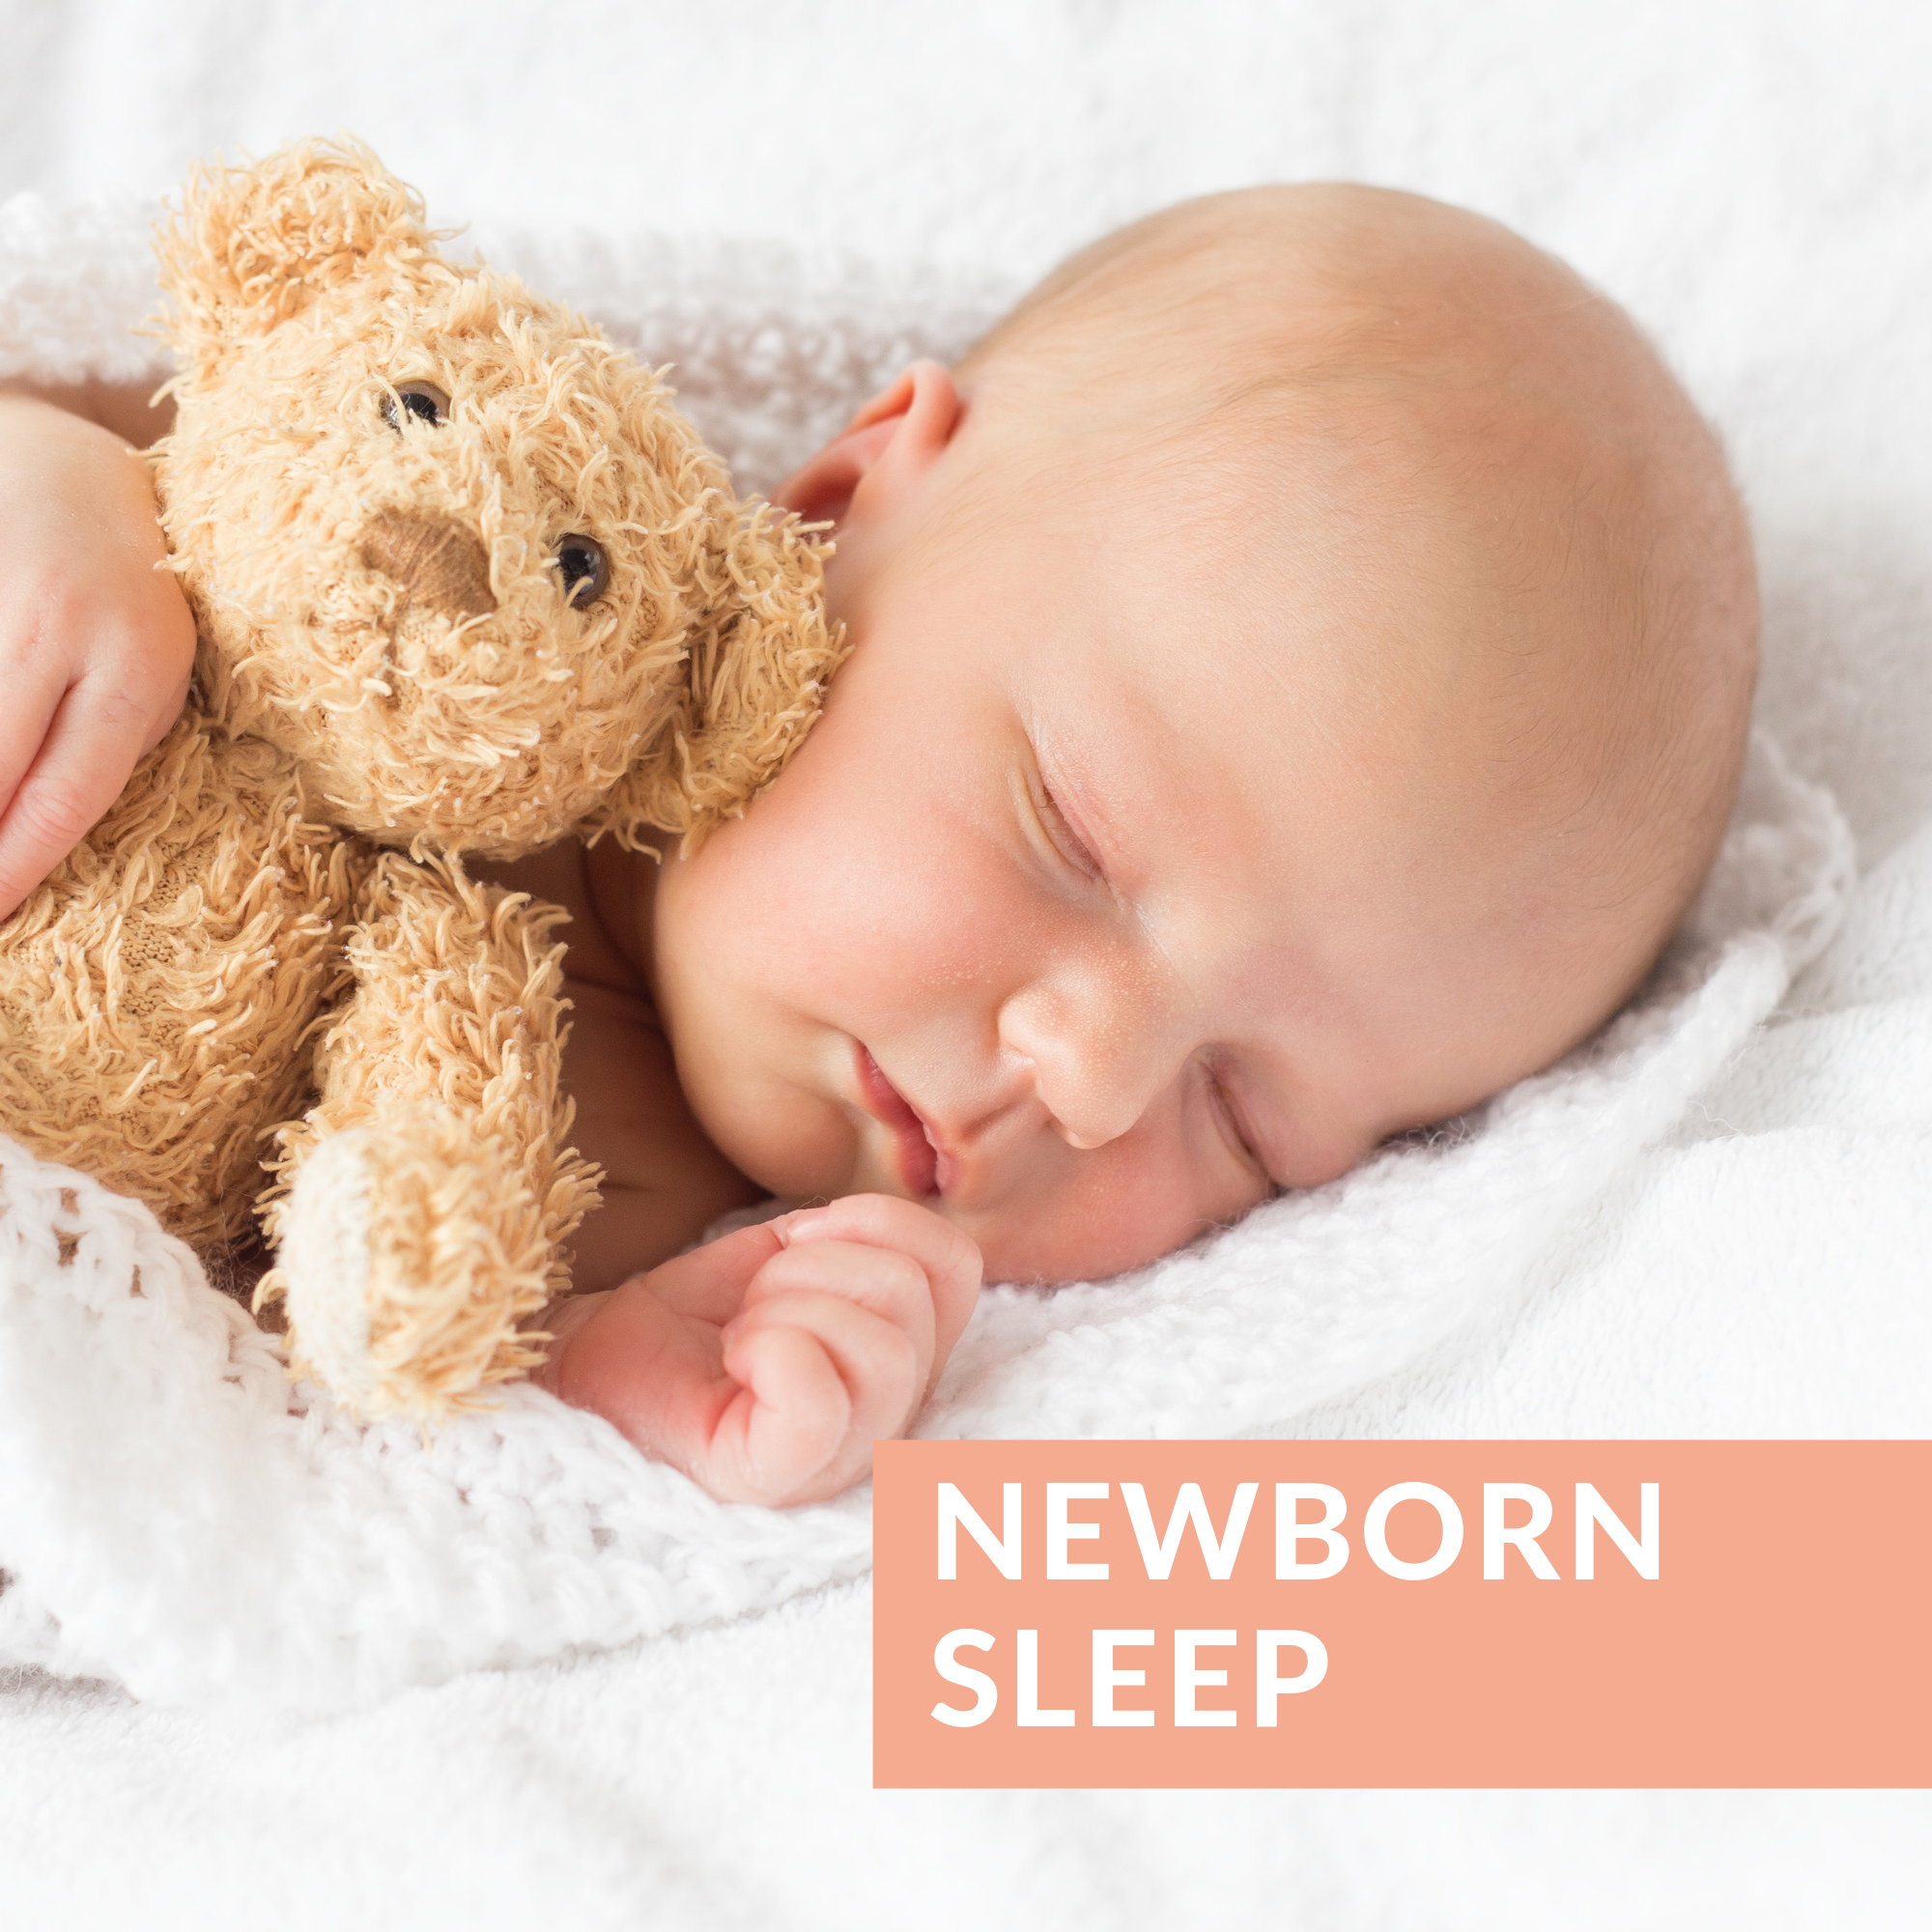 newborn sleep expert